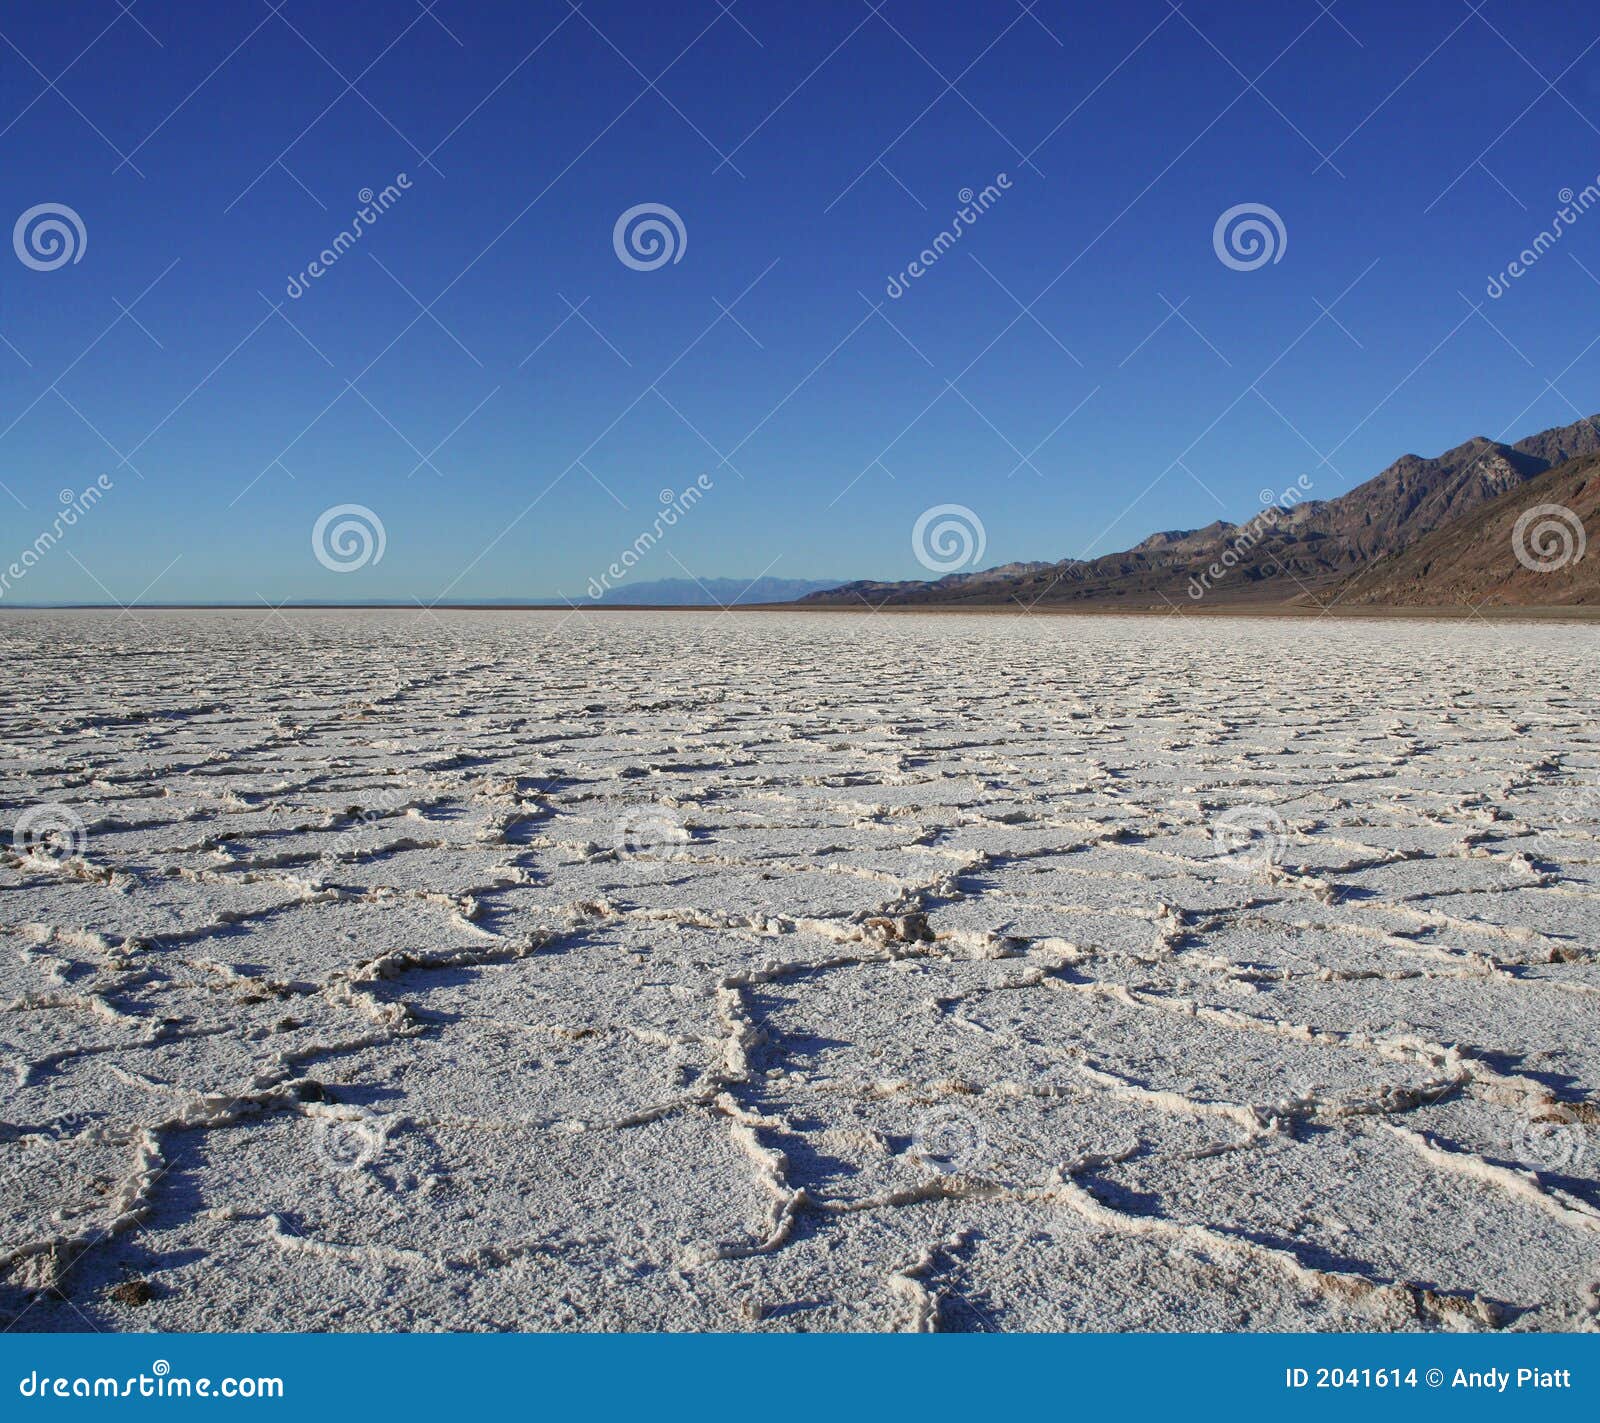 salt flats of death valley